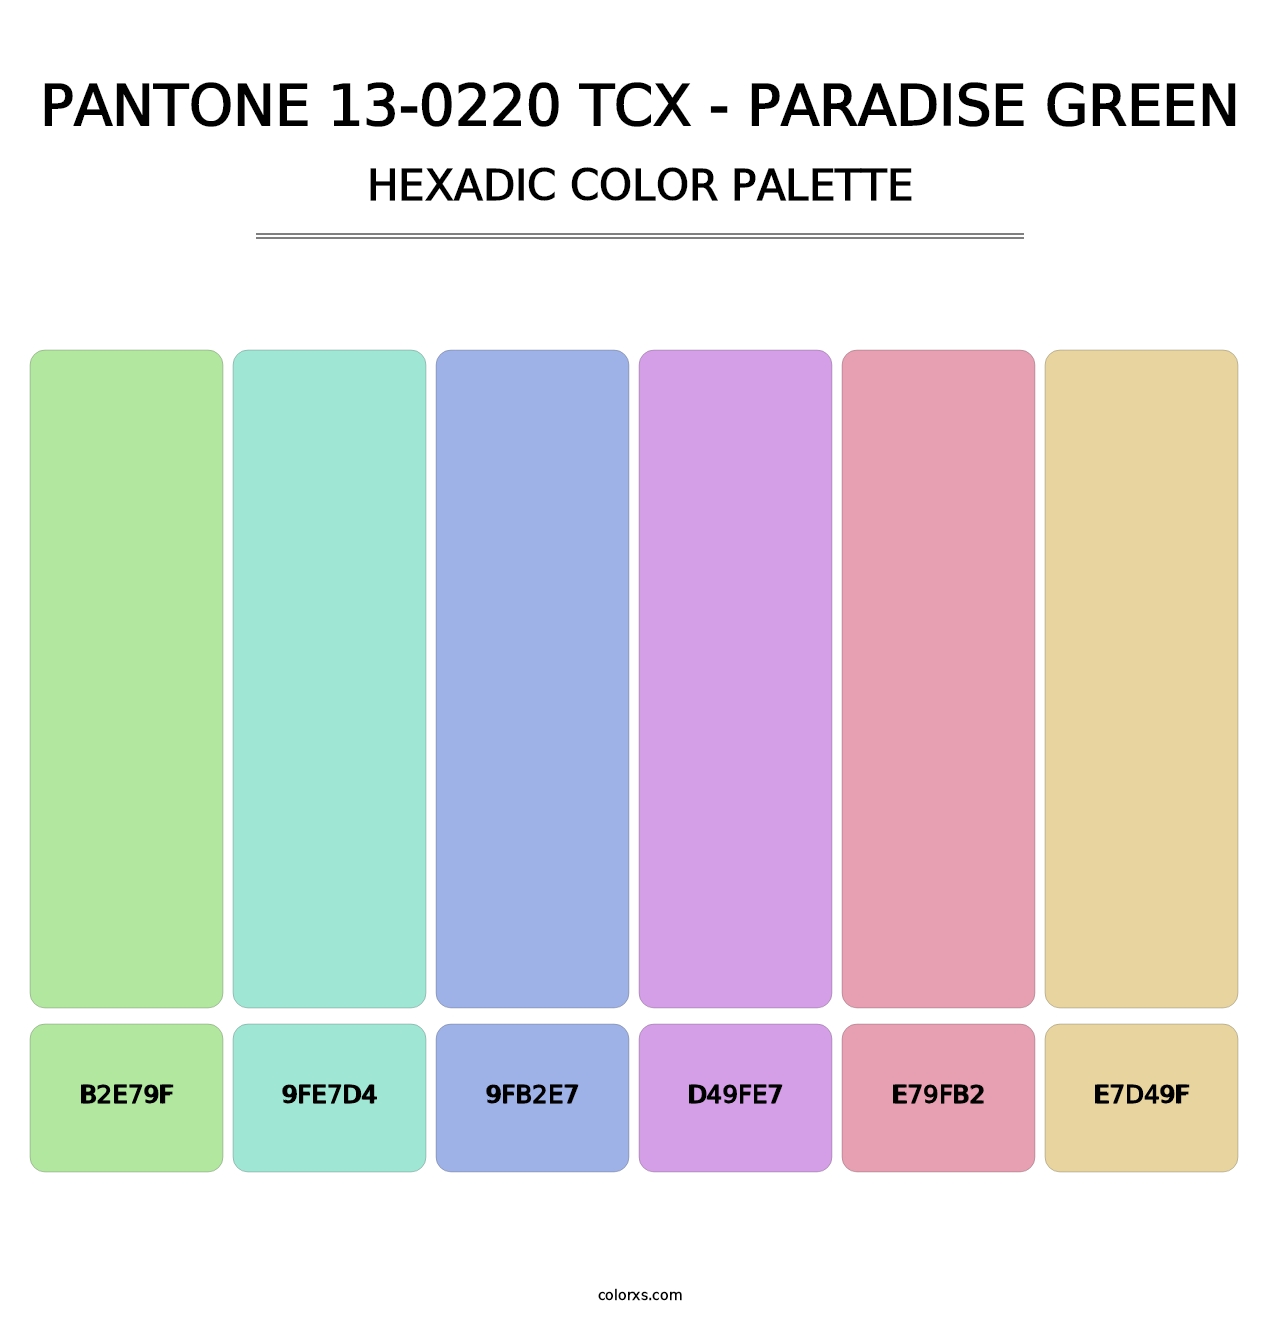 PANTONE 13-0220 TCX - Paradise Green - Hexadic Color Palette